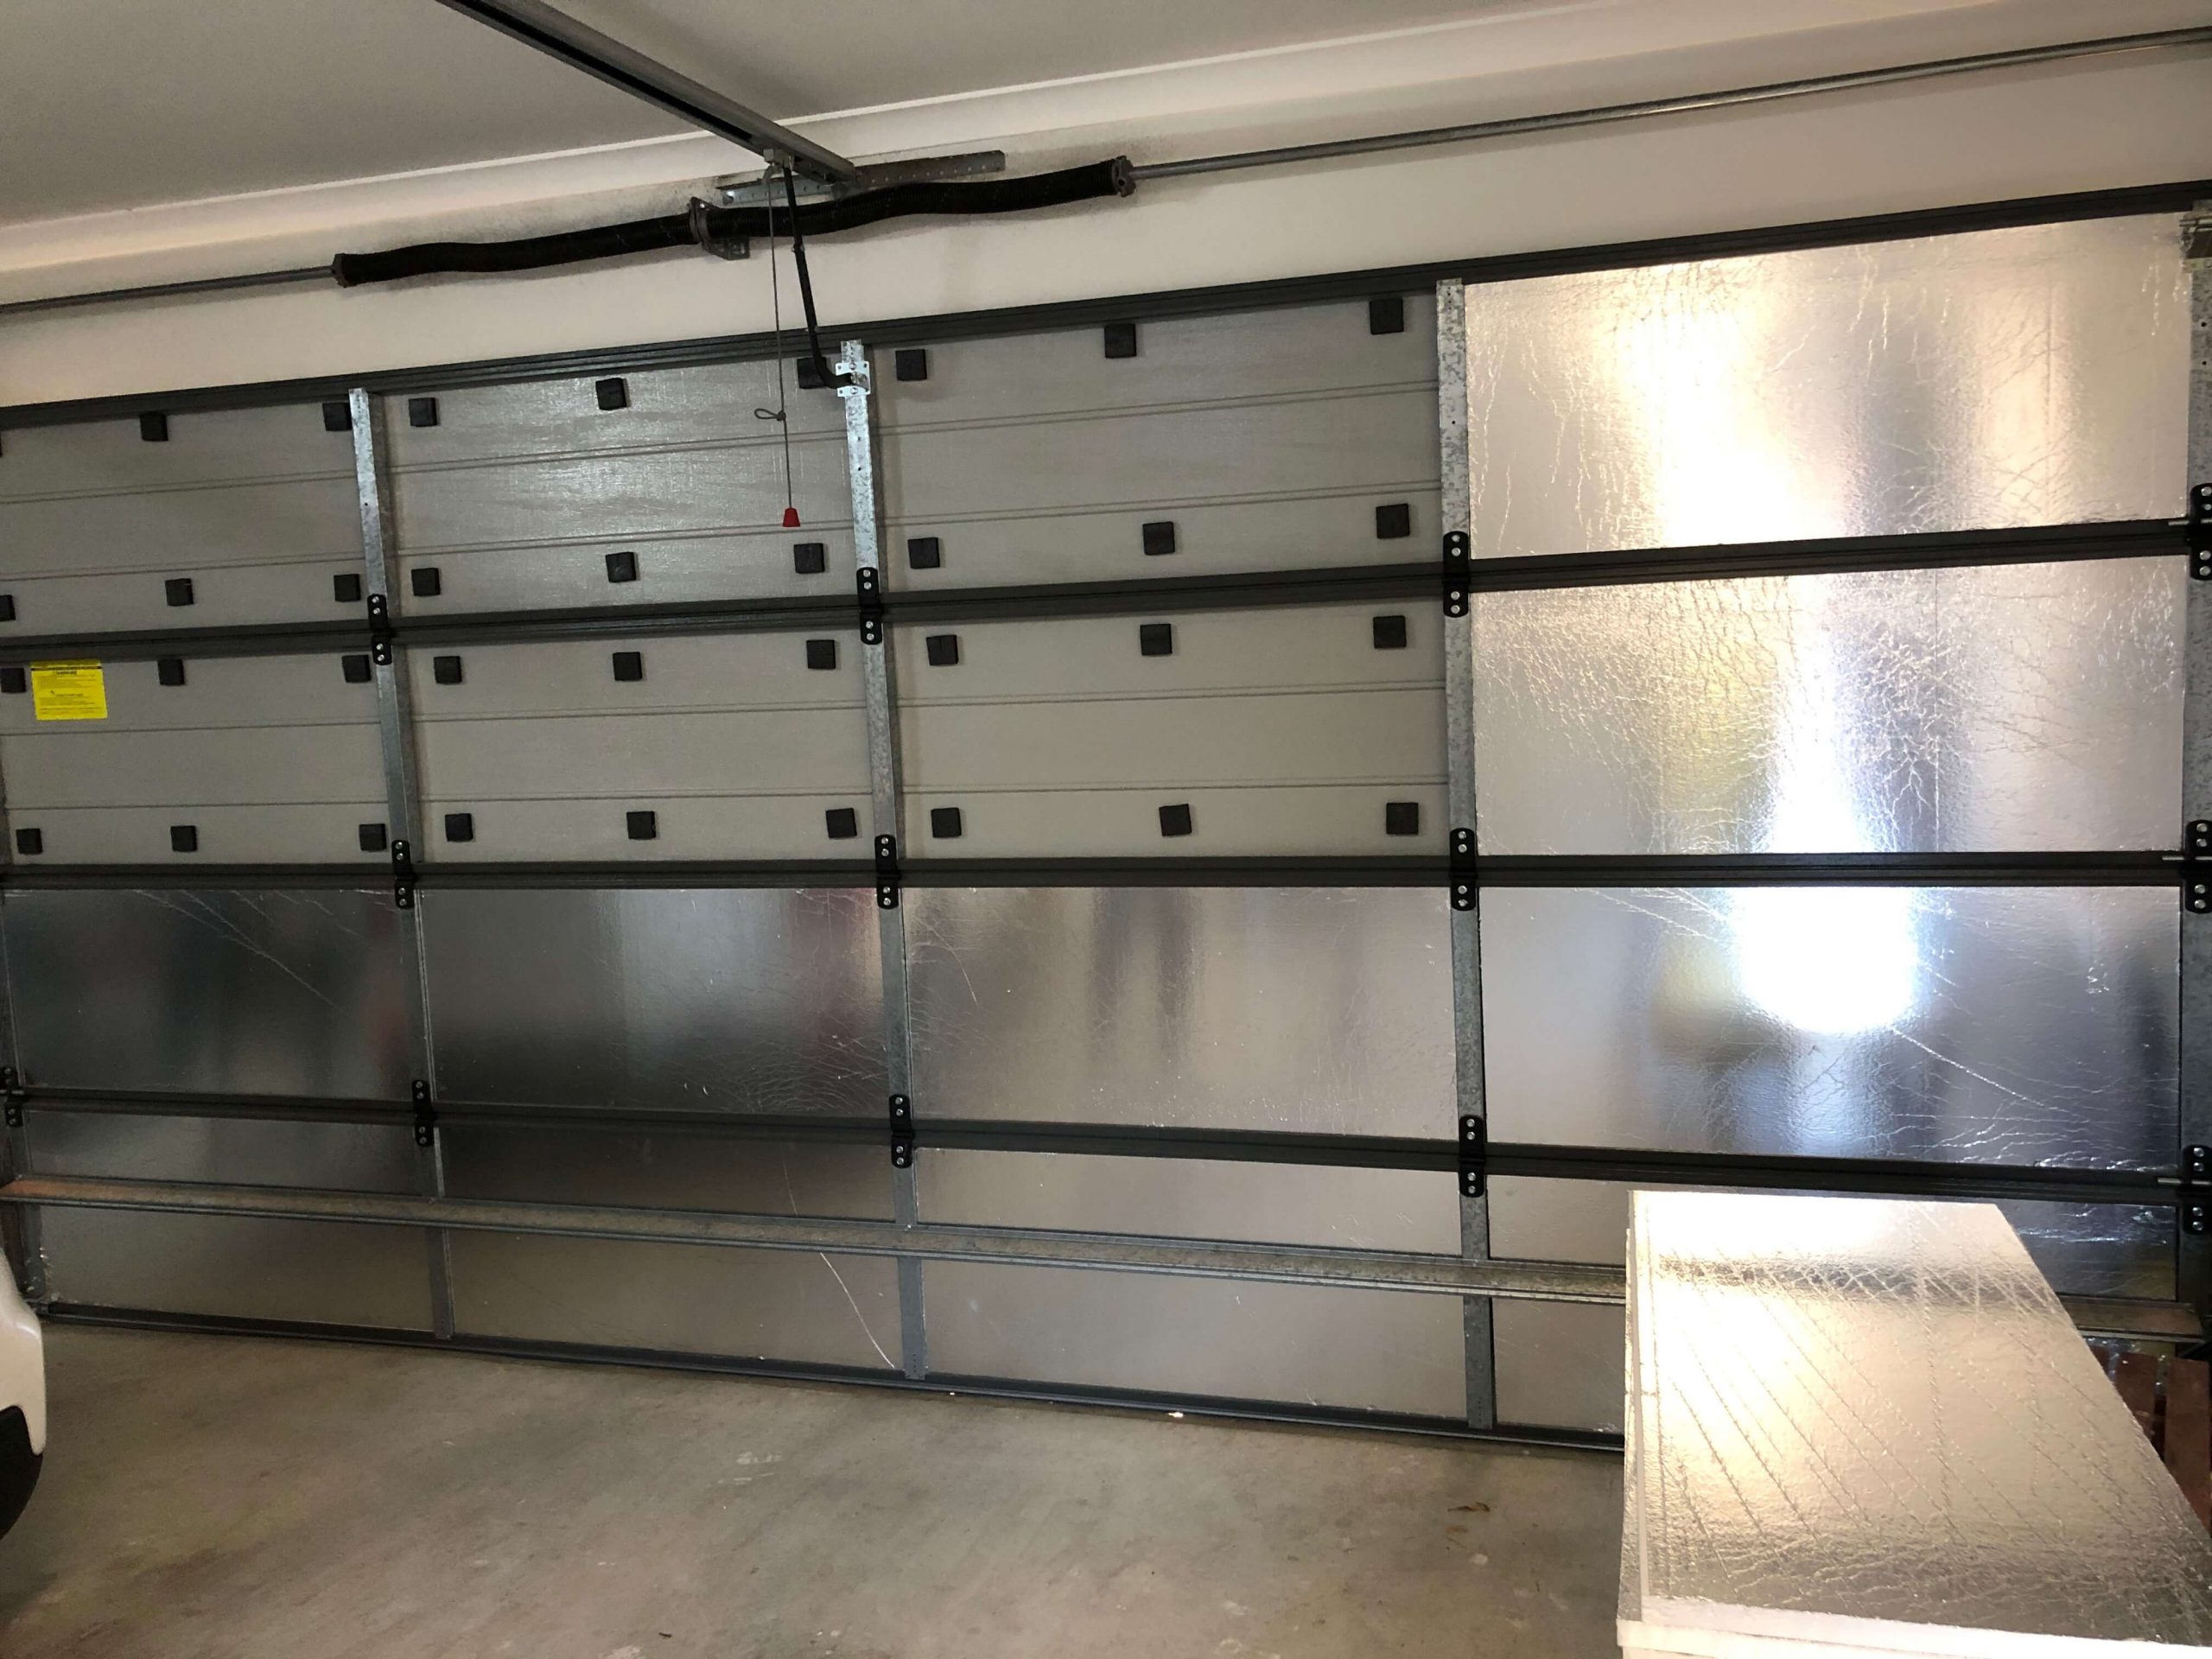 42  Garage door insulation kit au With Remote Control